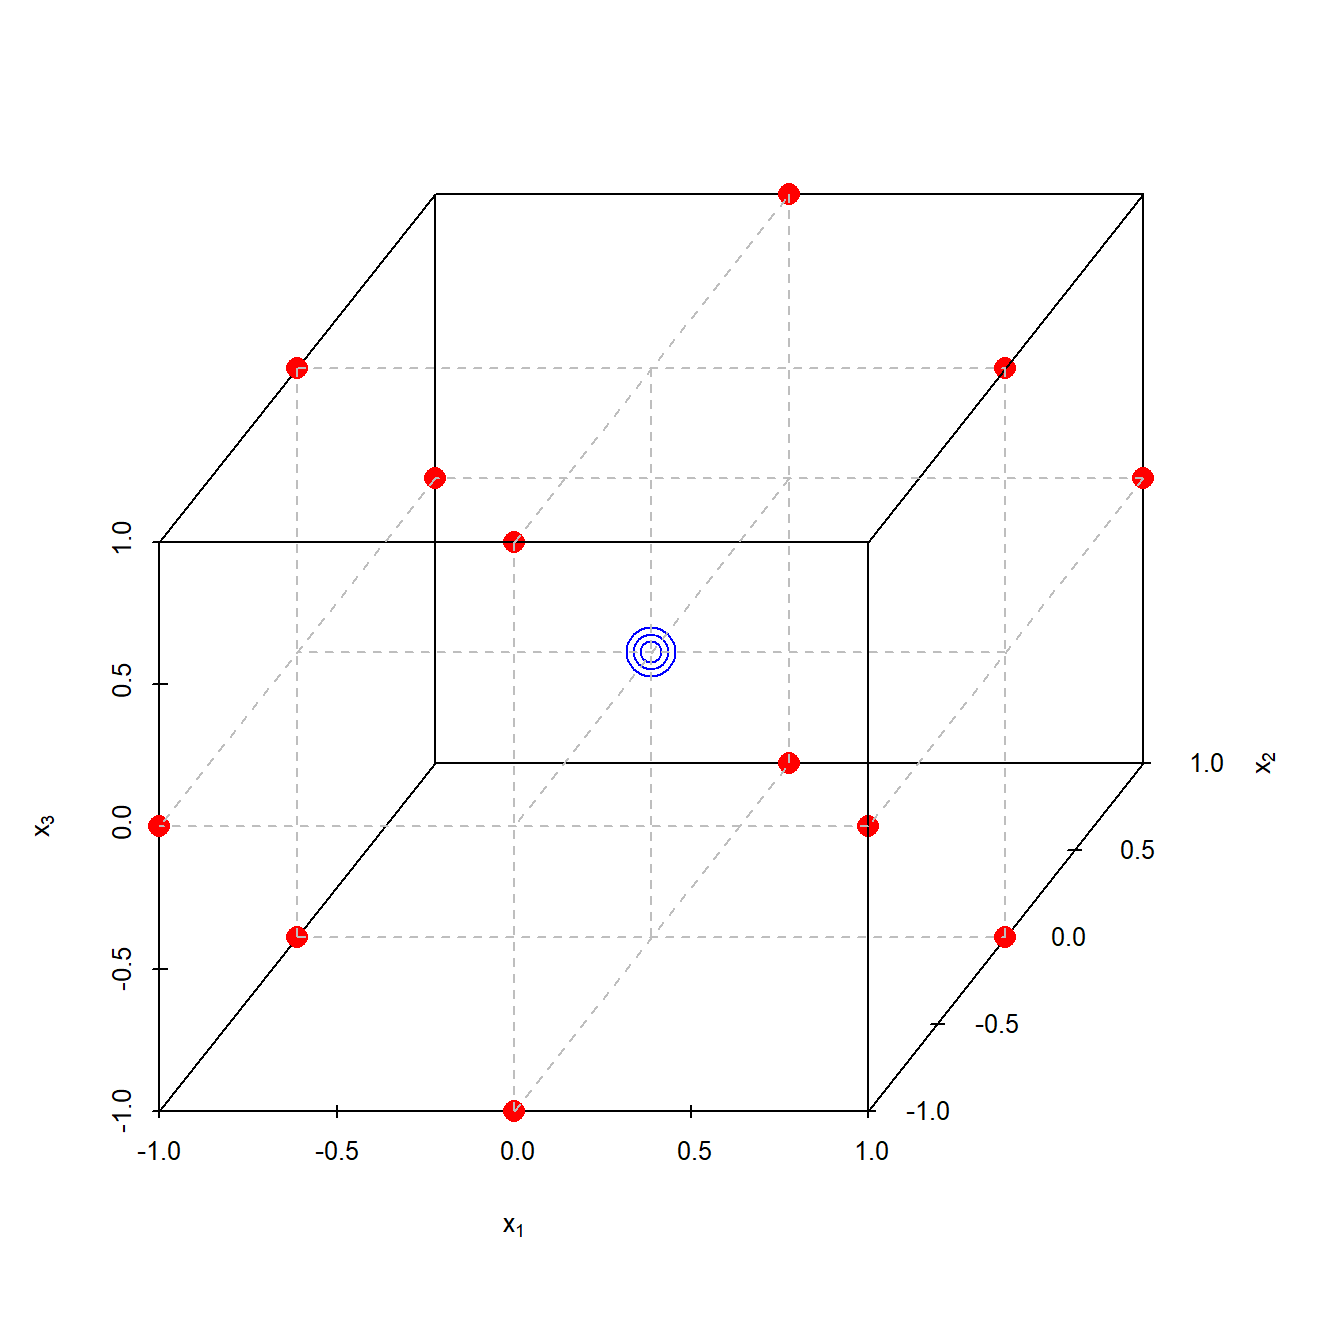 Three dimensional coded Box-Behnken design with three center points